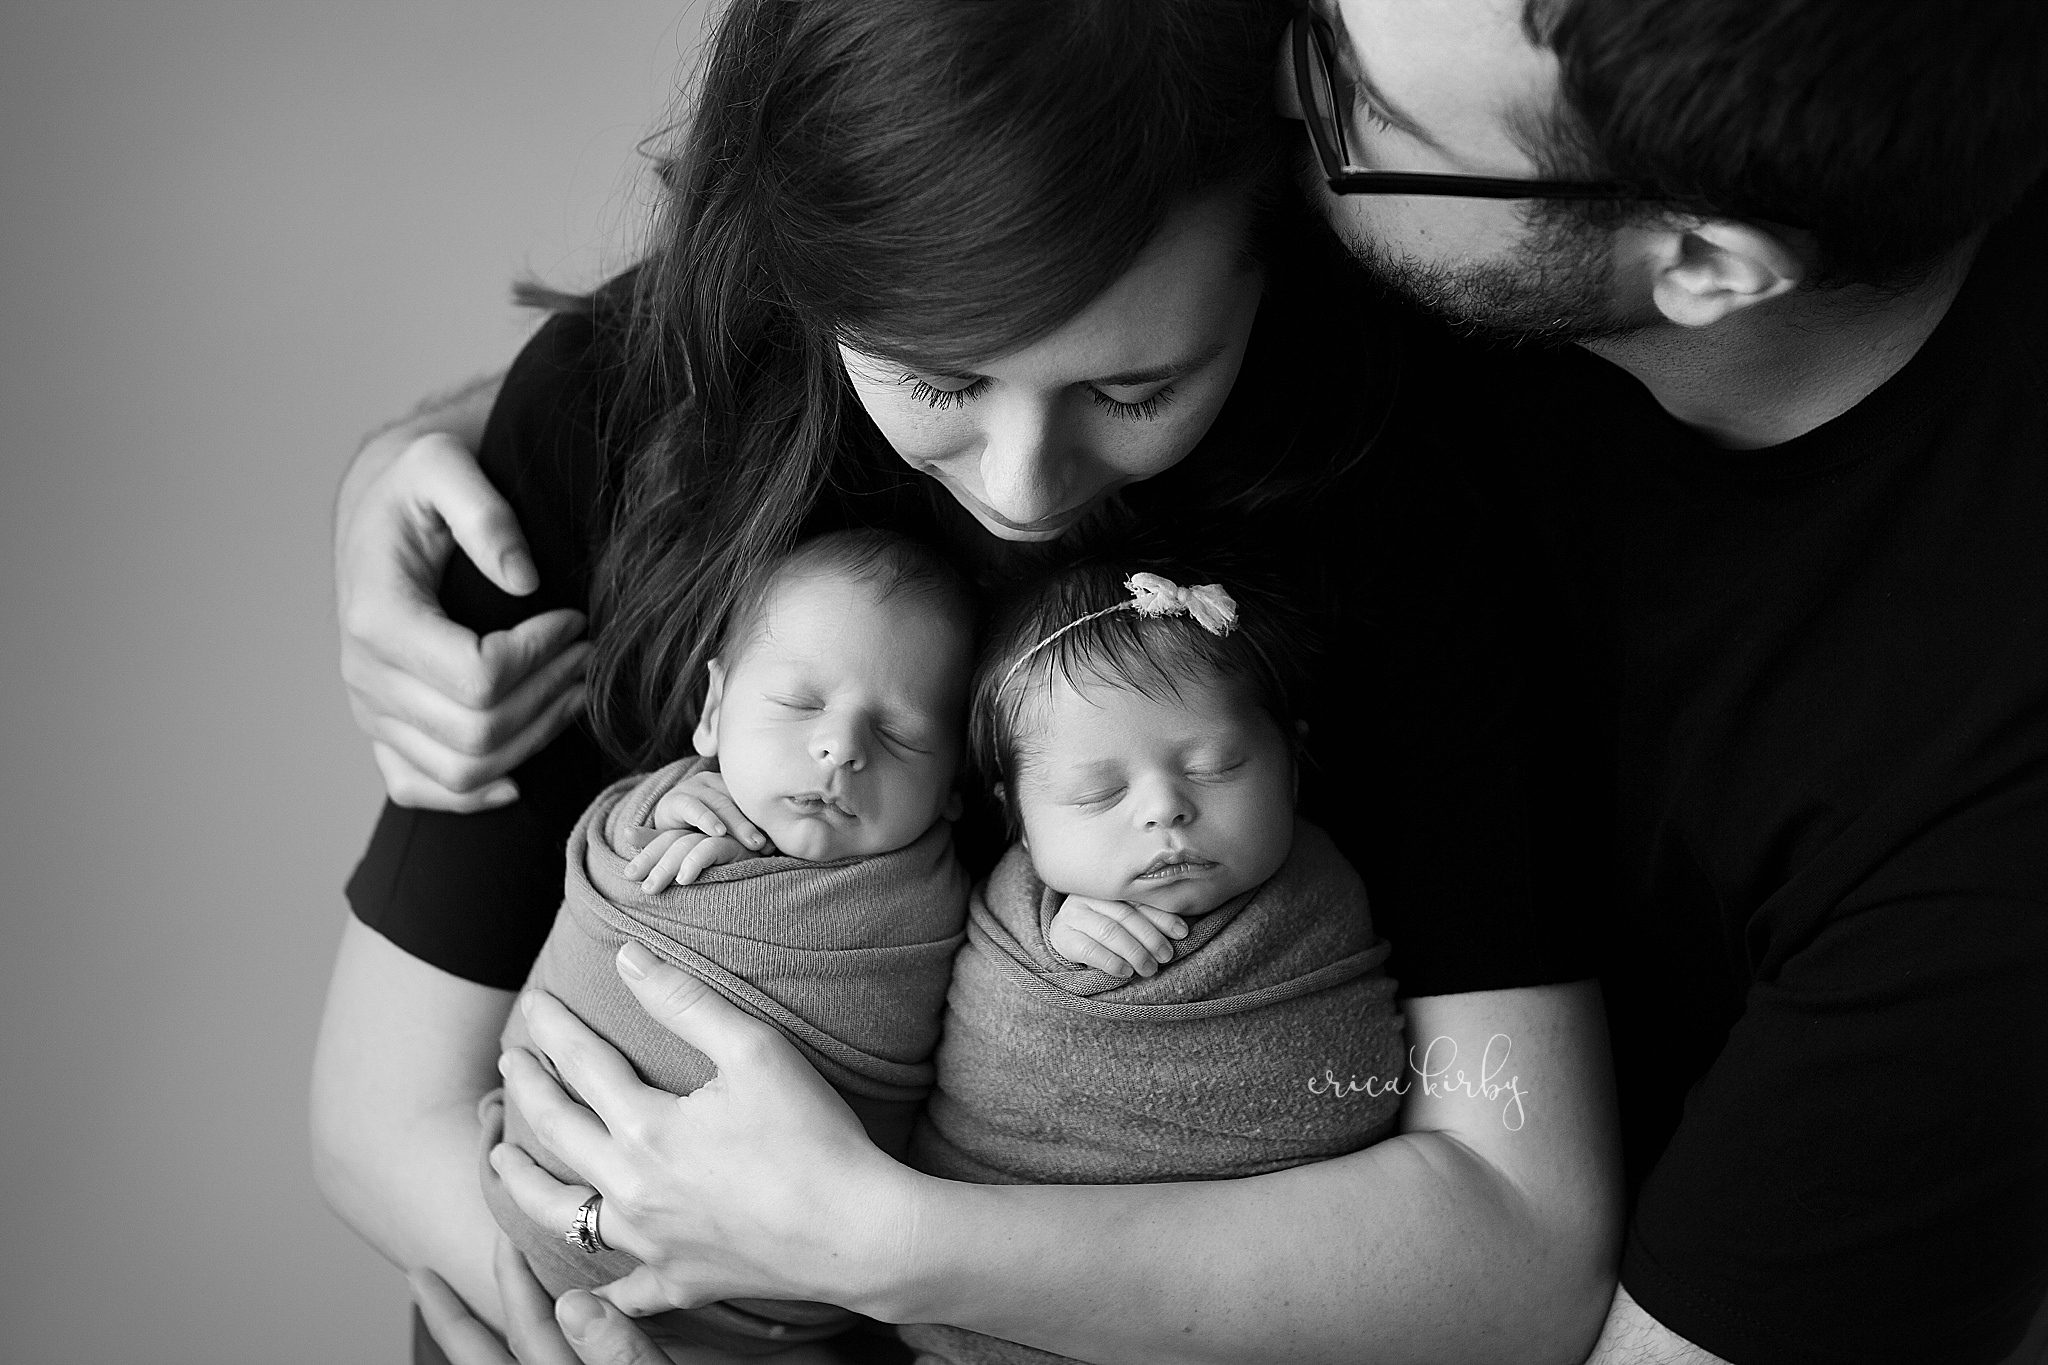 Northwest Arkansas Newborn Twins Photographer - Erica Kirby Photography Bentonville Rogers Fayetteville Newborn Baby Photographer